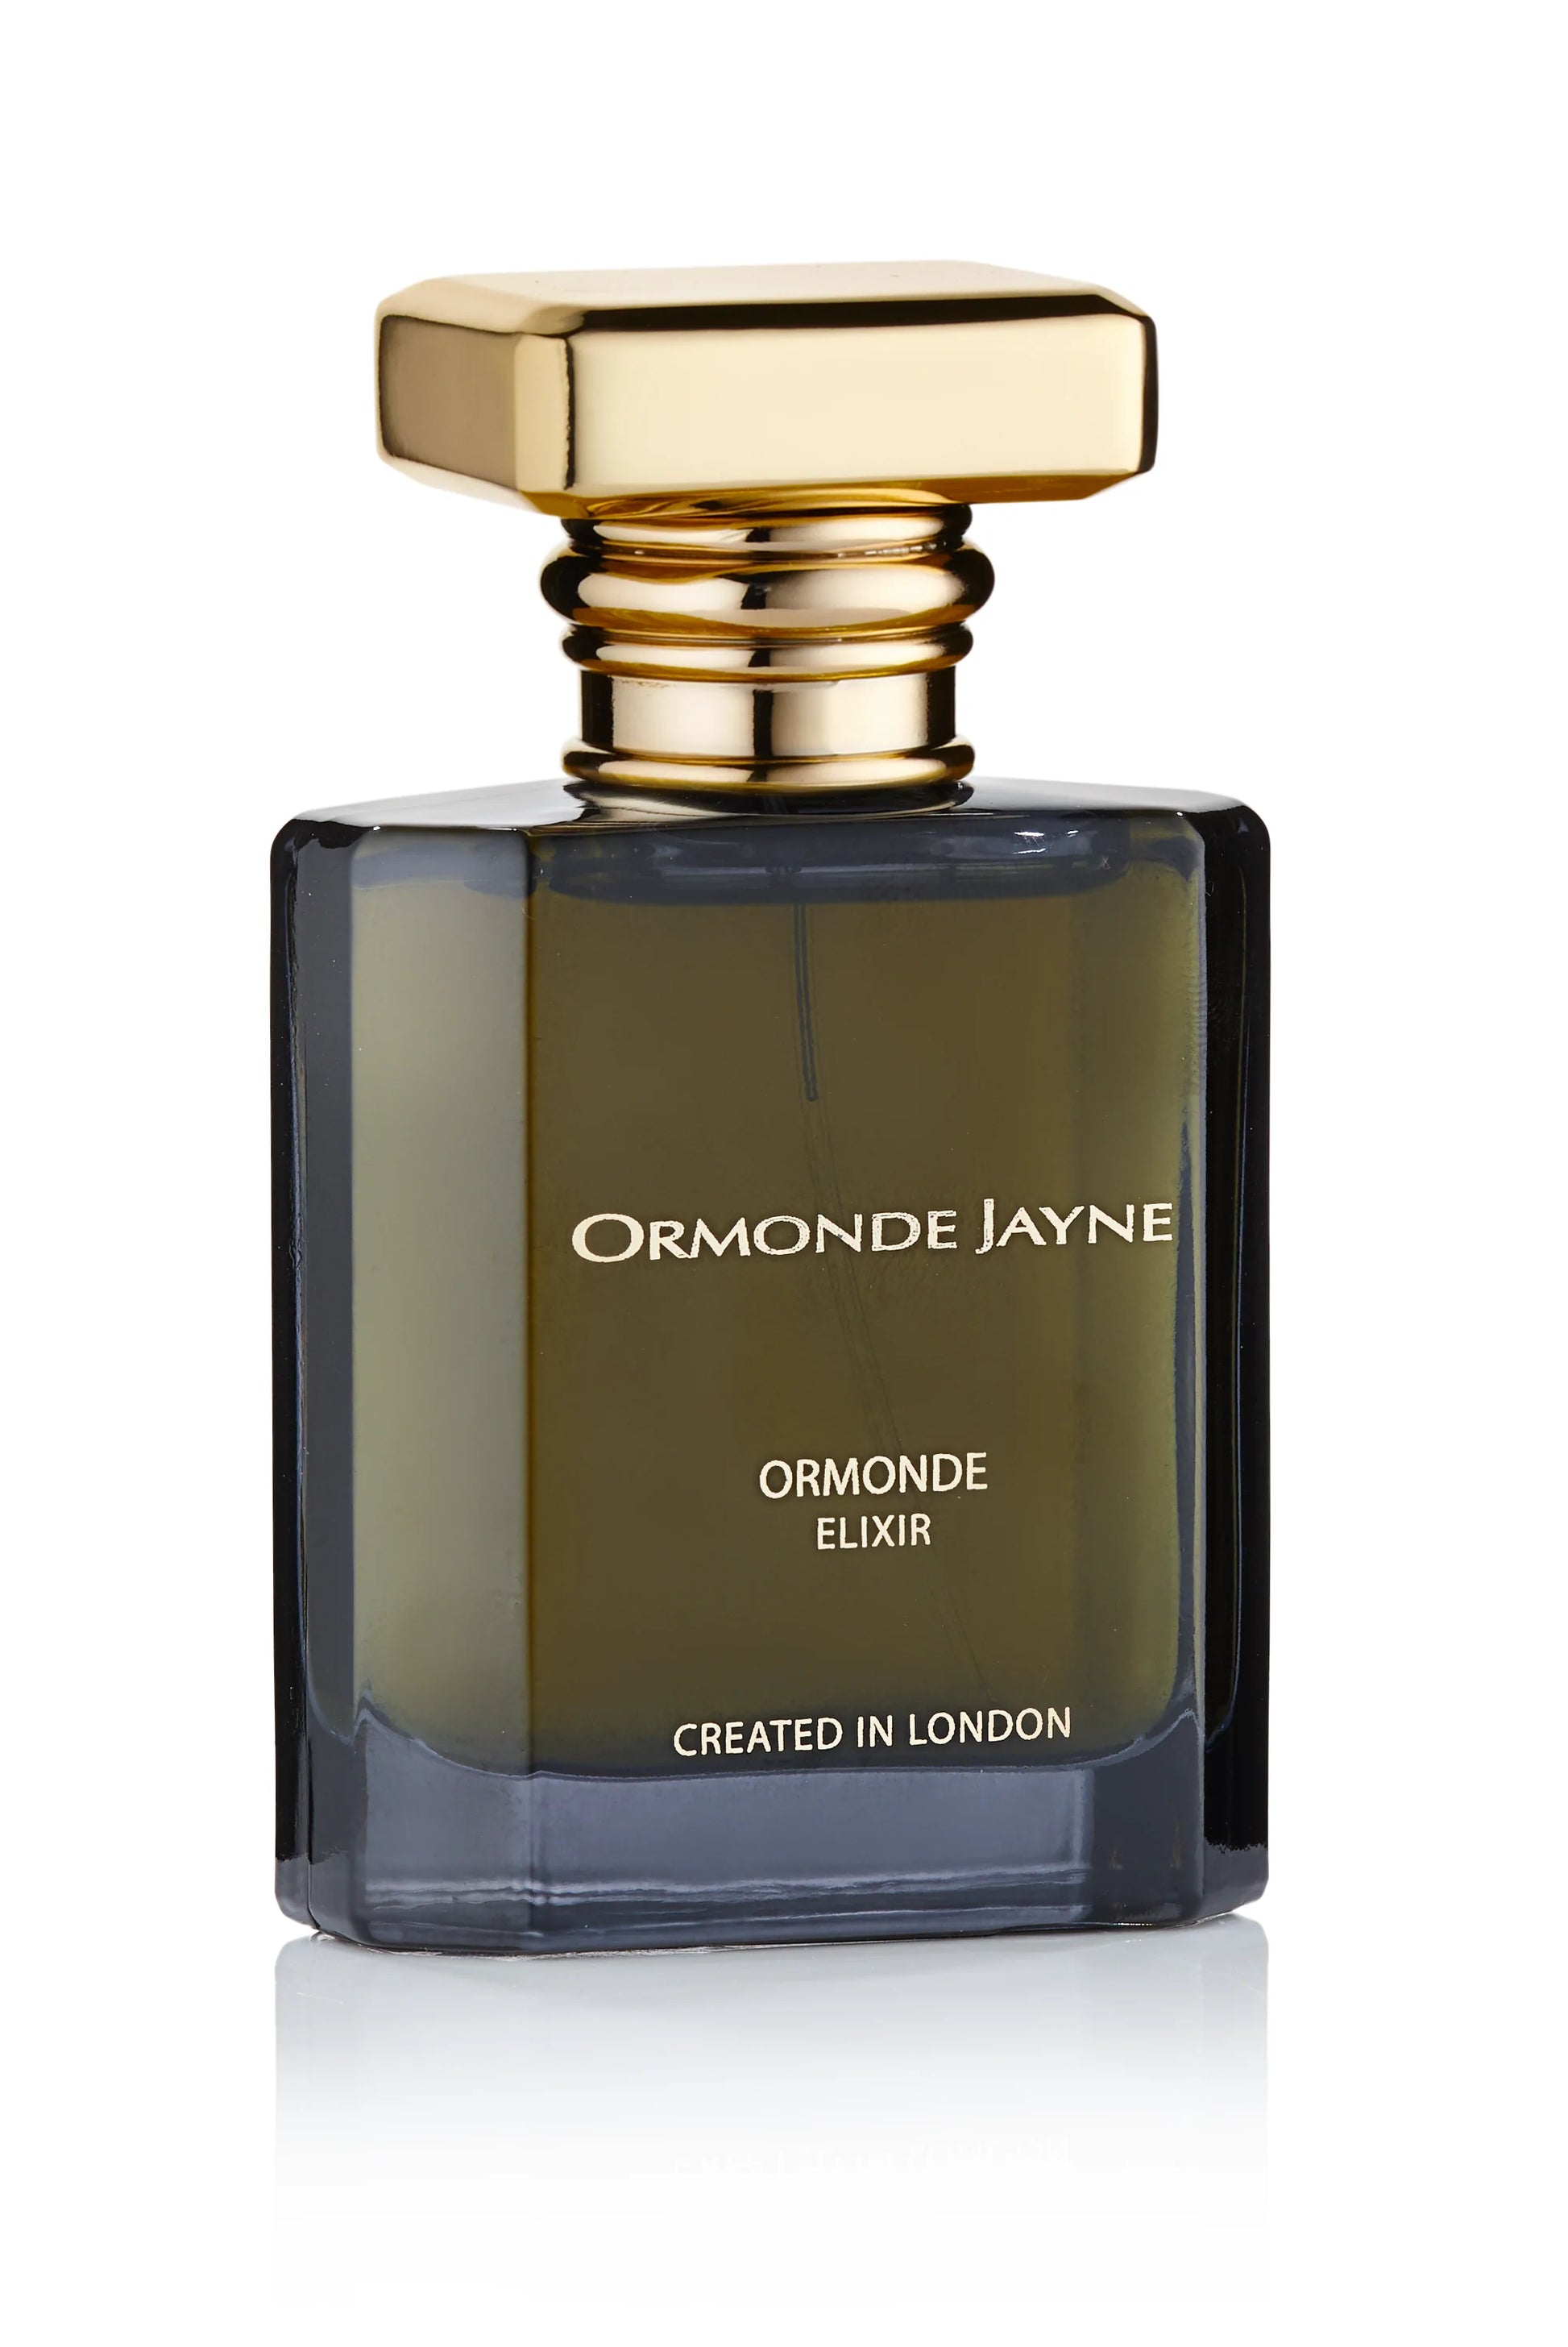 Ormonde Jayne Ormonde Elixir 2ml 0.06 fl. 온스 공식 향수 샘플